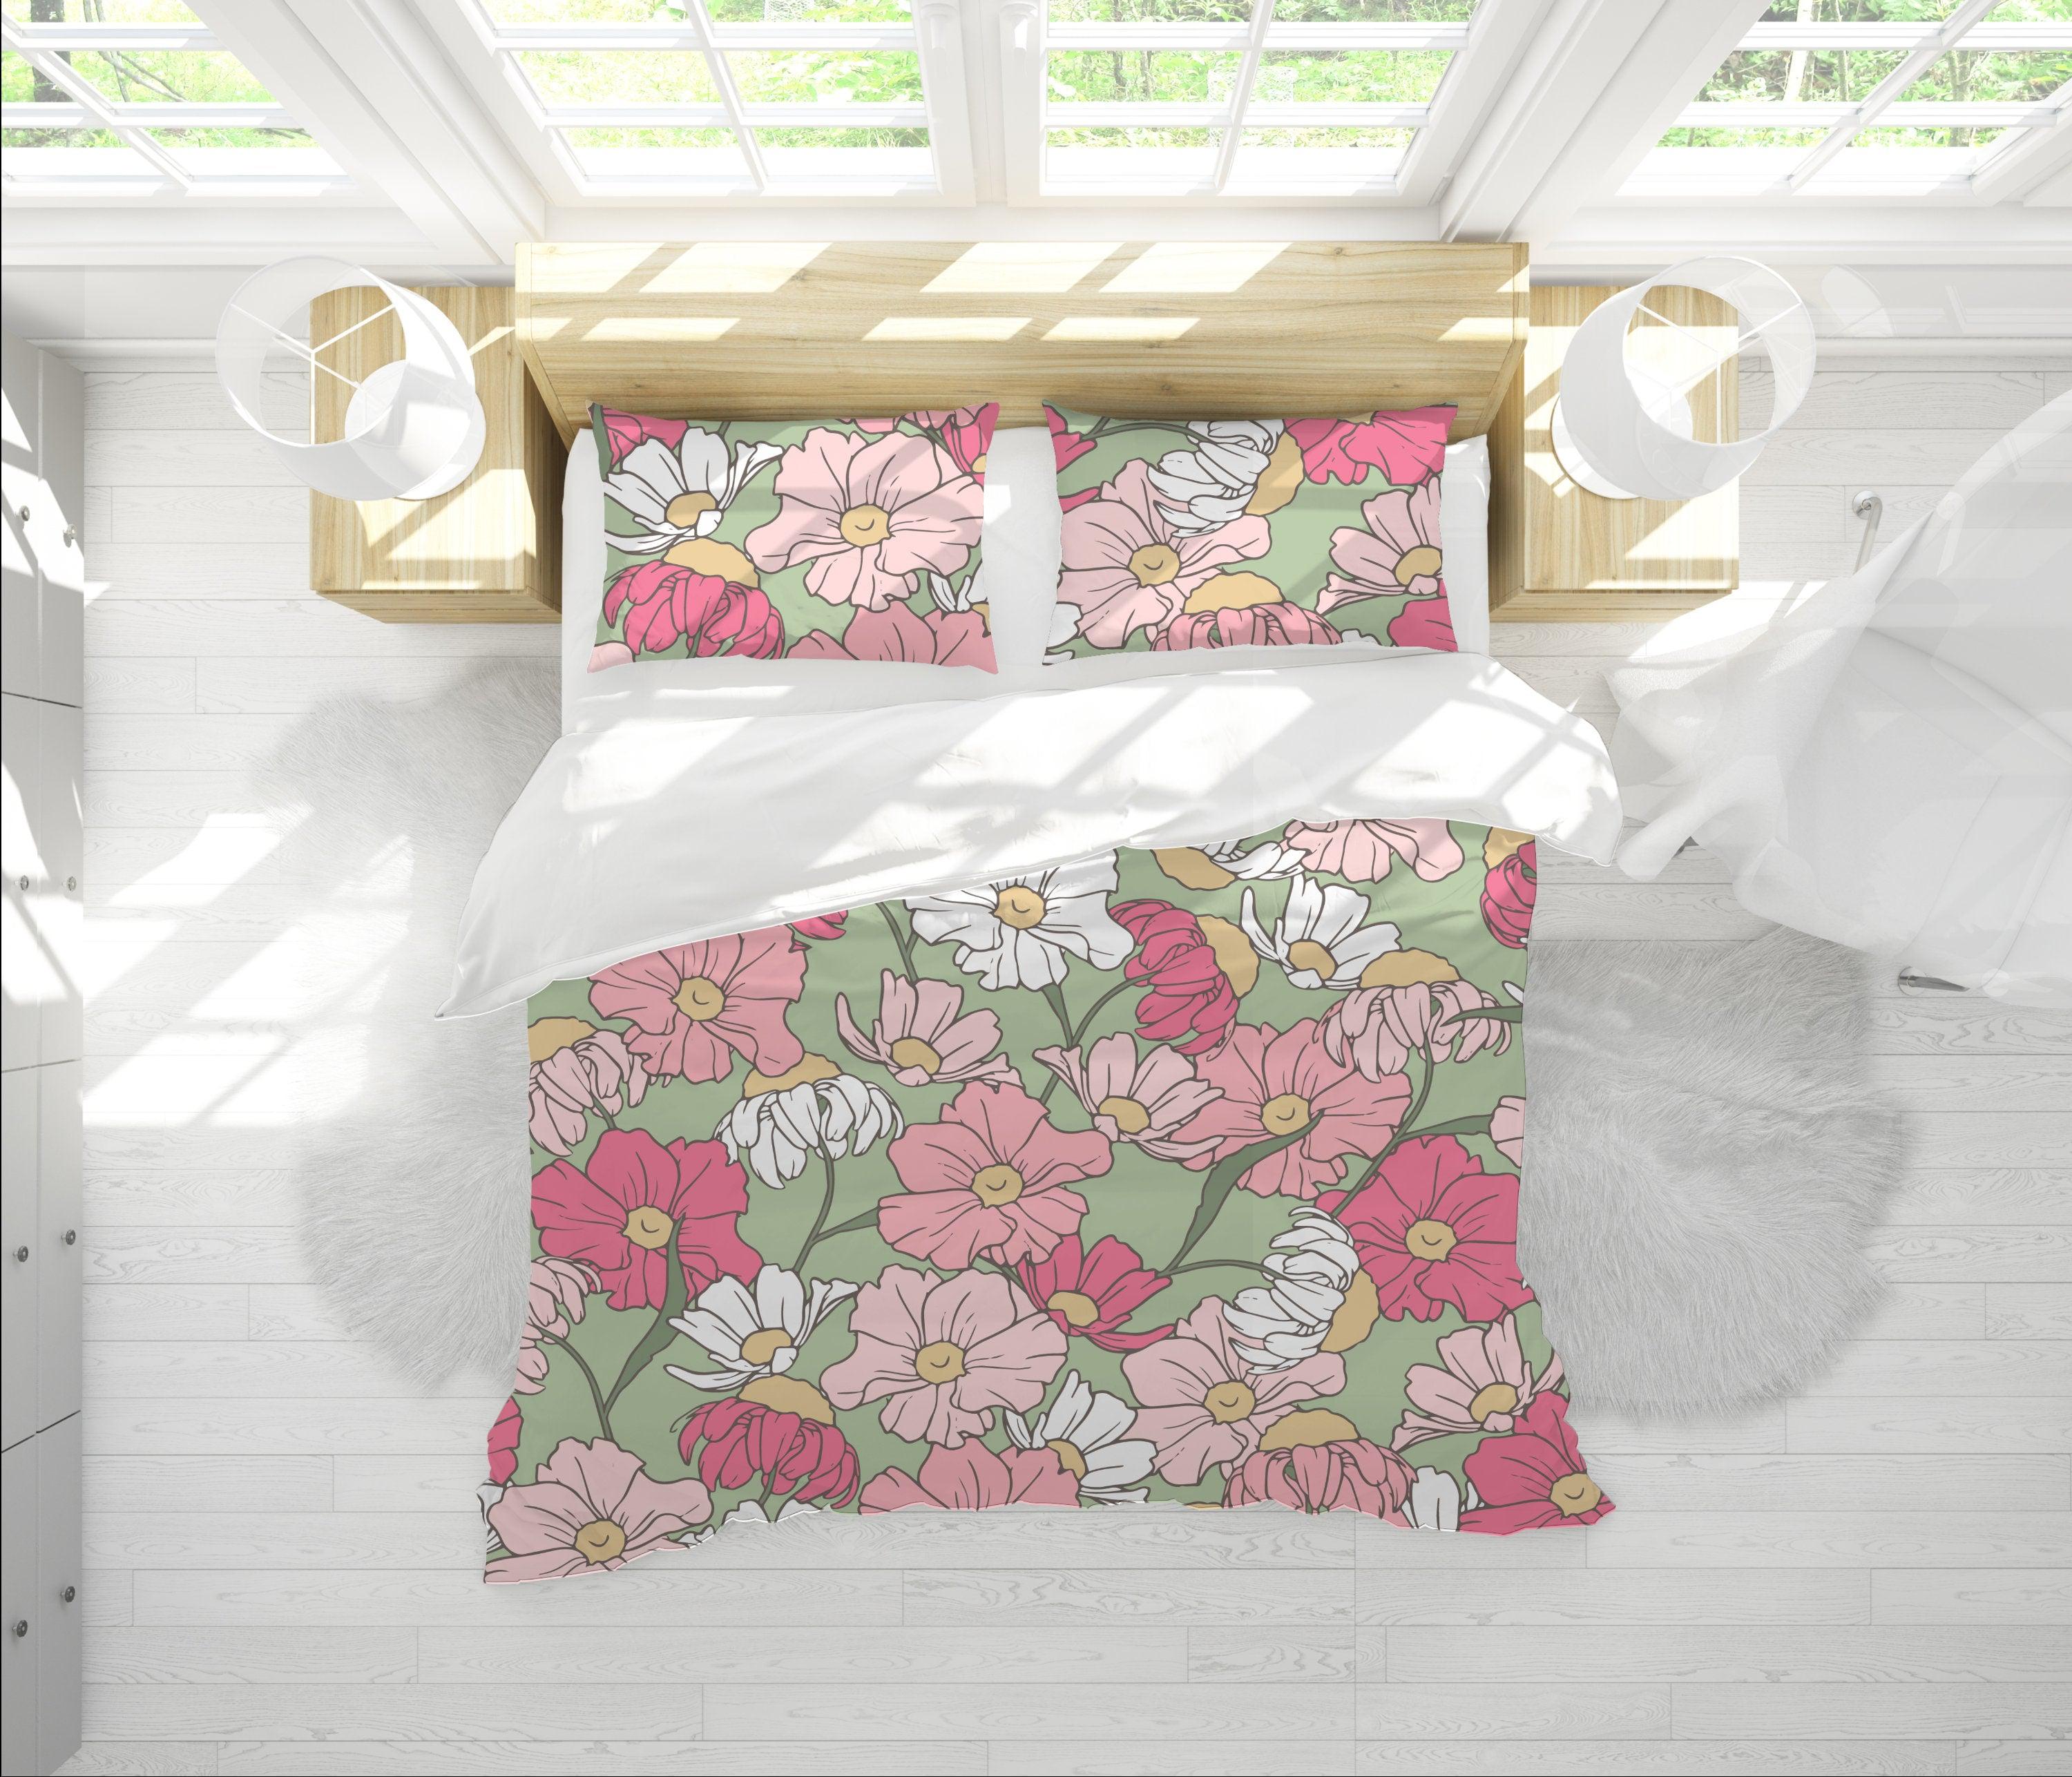 daintyduvet Green Duvet Cover Set Pink Floral Design | Dorm Bedding Set with Pillow Cover Case